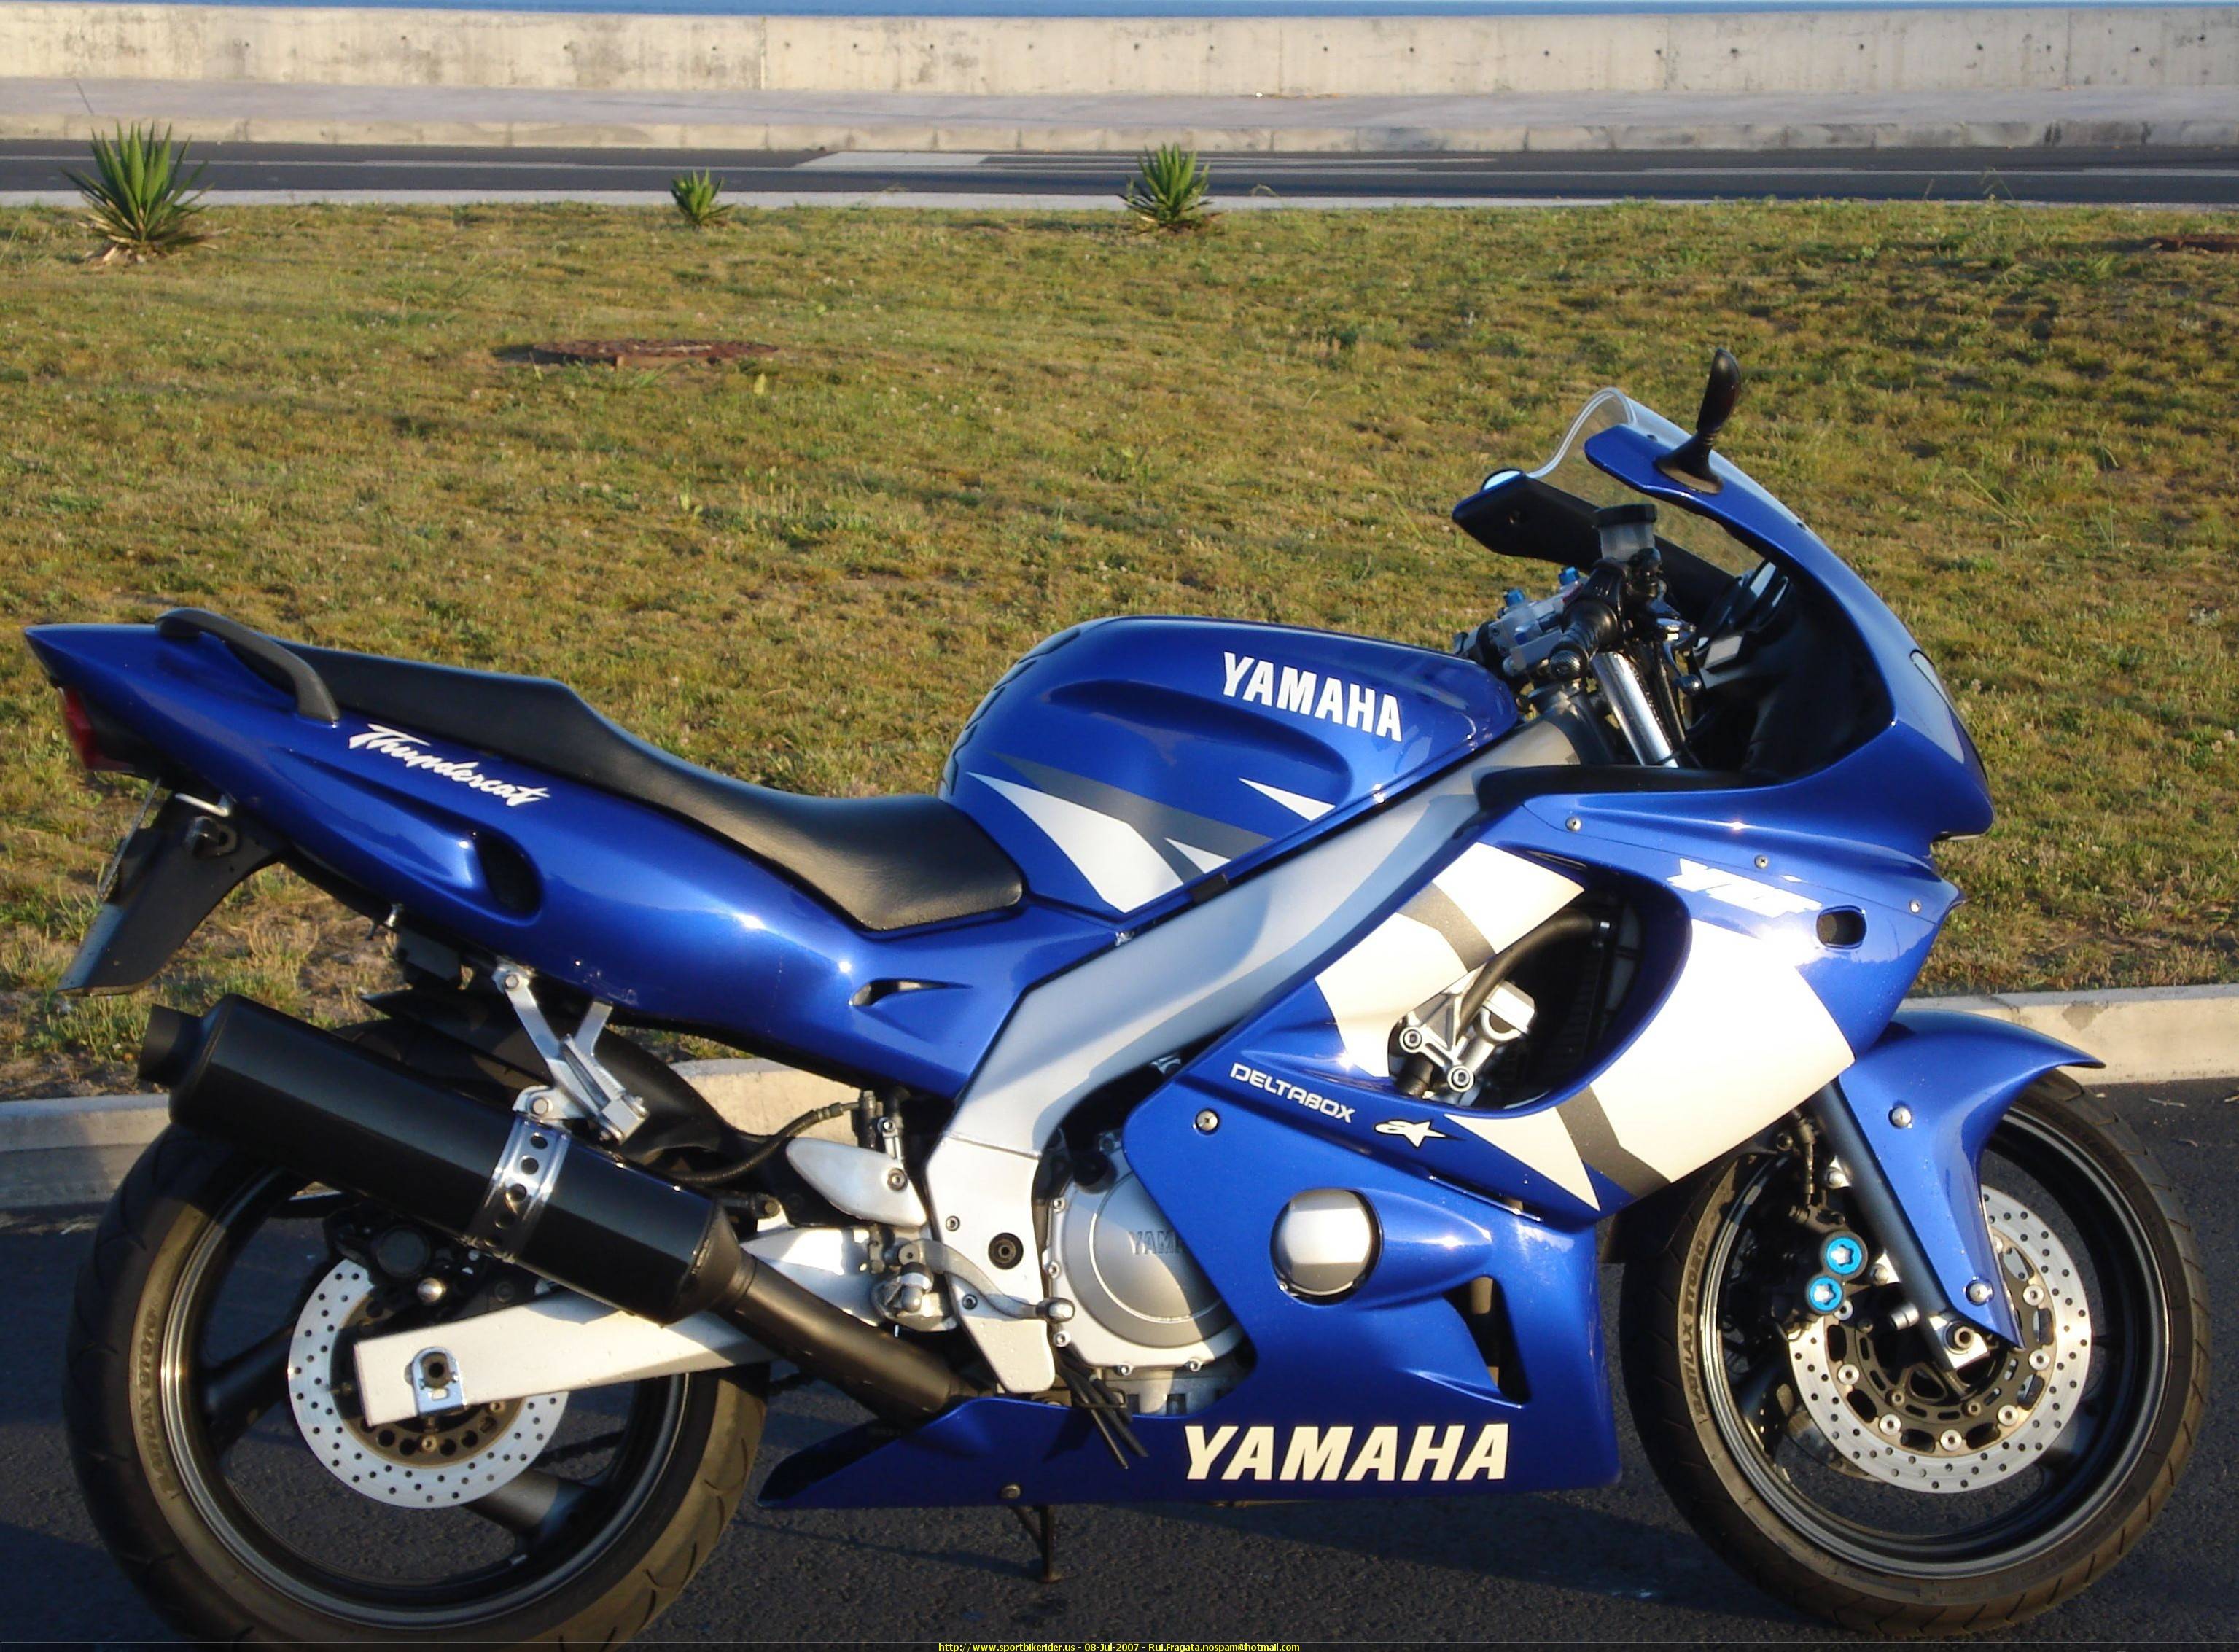 Ямаха тюмень купить. Yamaha yzf600r. Yamaha Thundercat 600 2005. Ямаха yzf600r Thundercat. Yamaha yzf600r Thundercat, 2003.